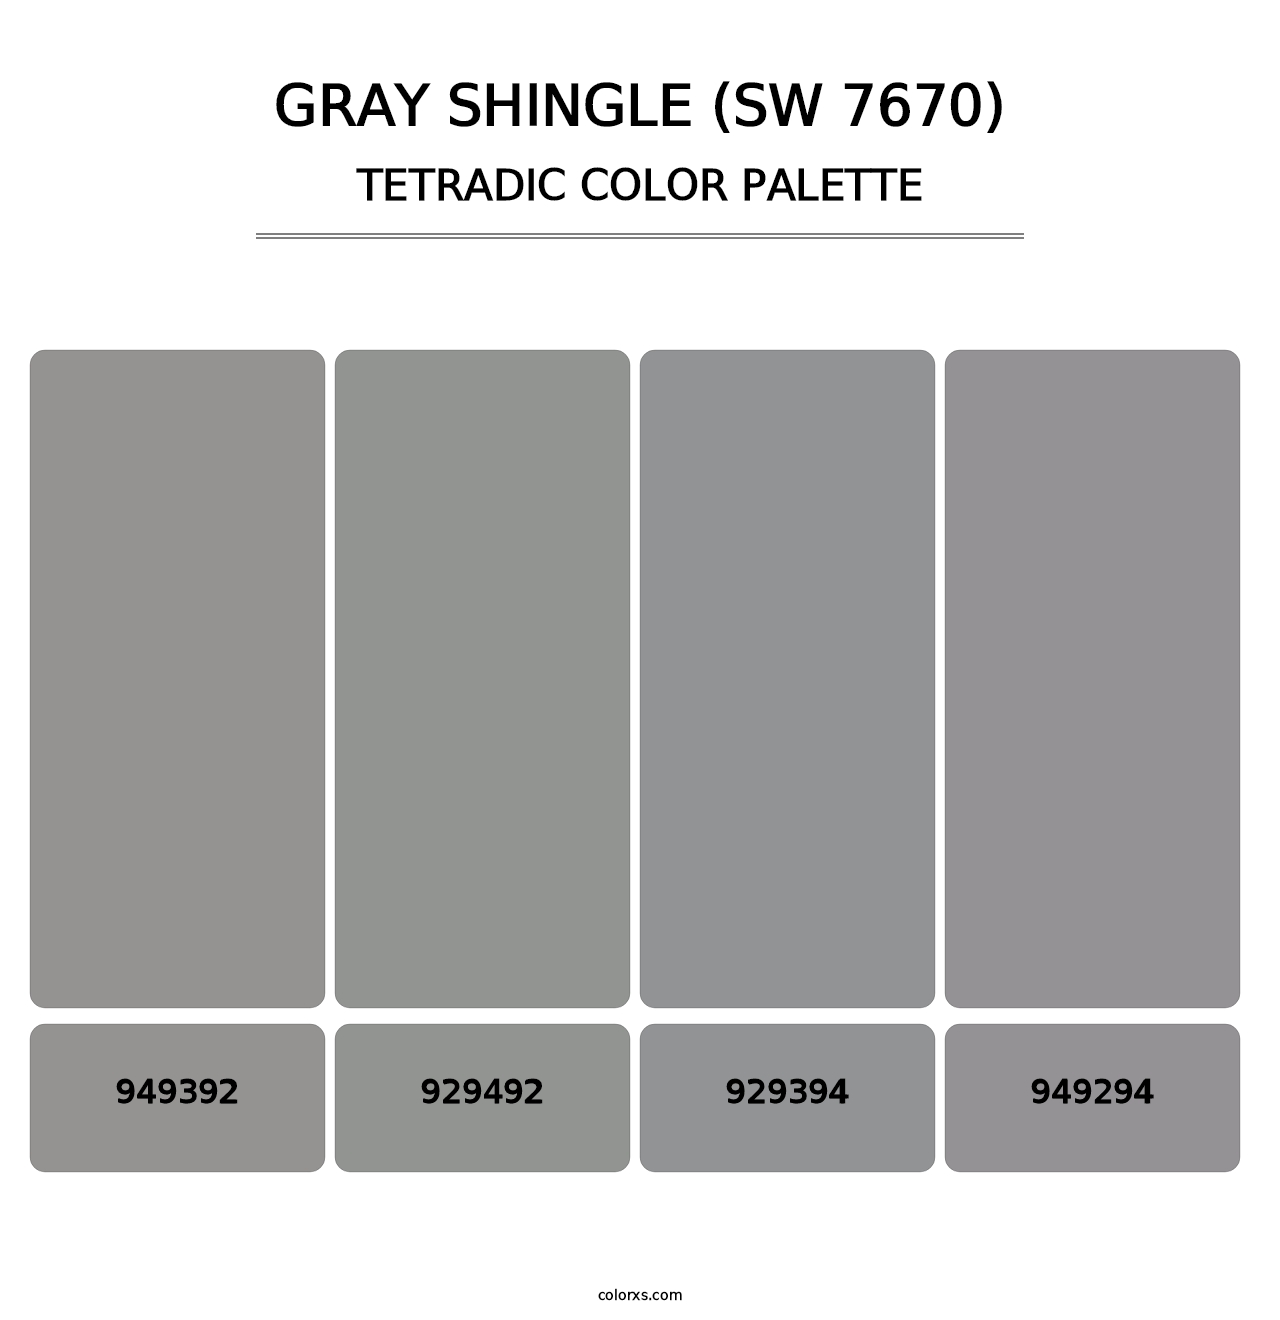 Gray Shingle (SW 7670) - Tetradic Color Palette